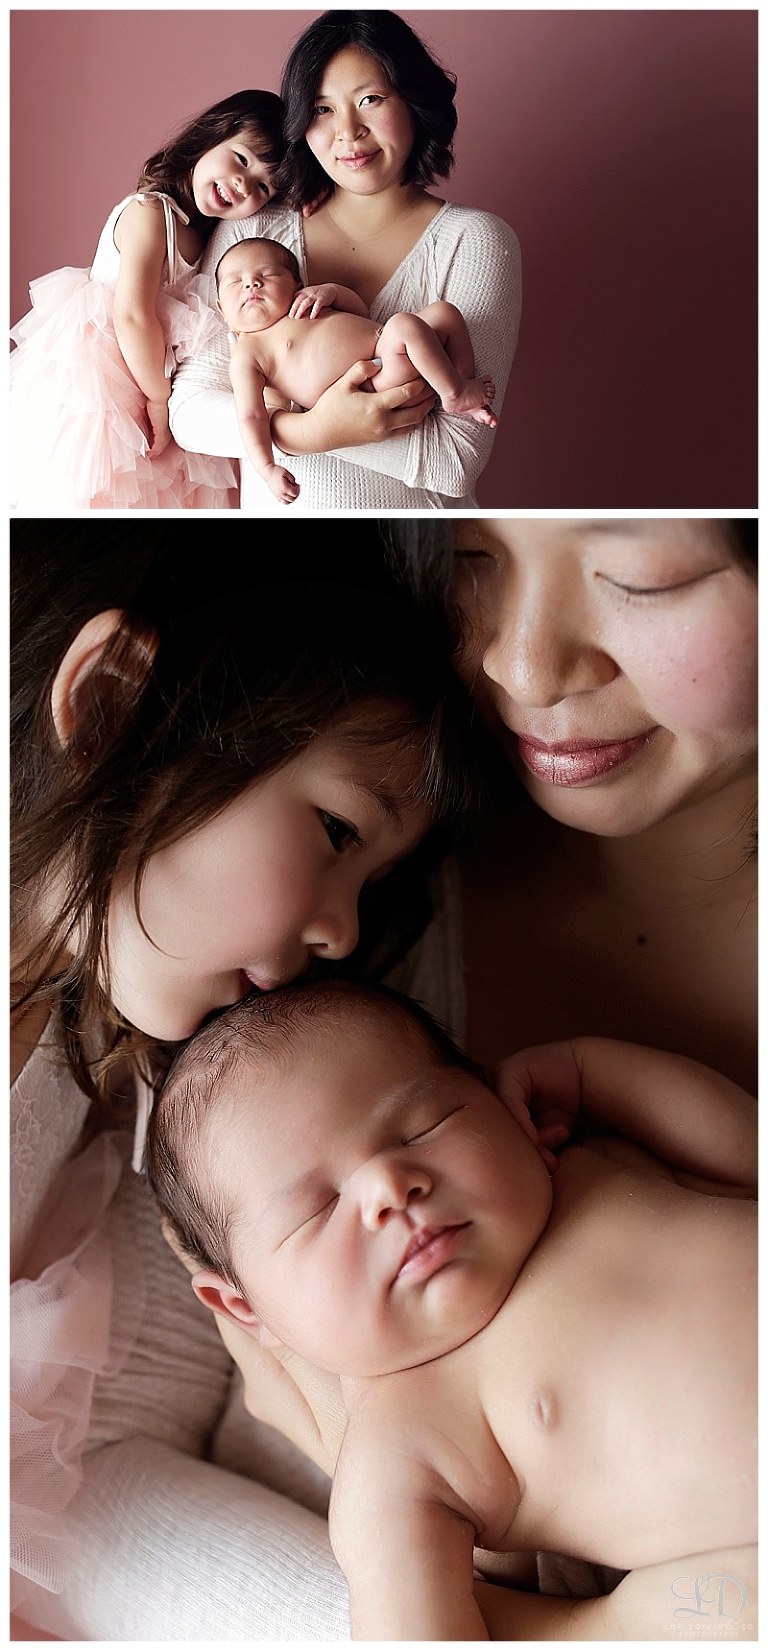 sweet newborn girl photoshoot-baby and sister photoshoot-lori dorman photography_0612.jpg